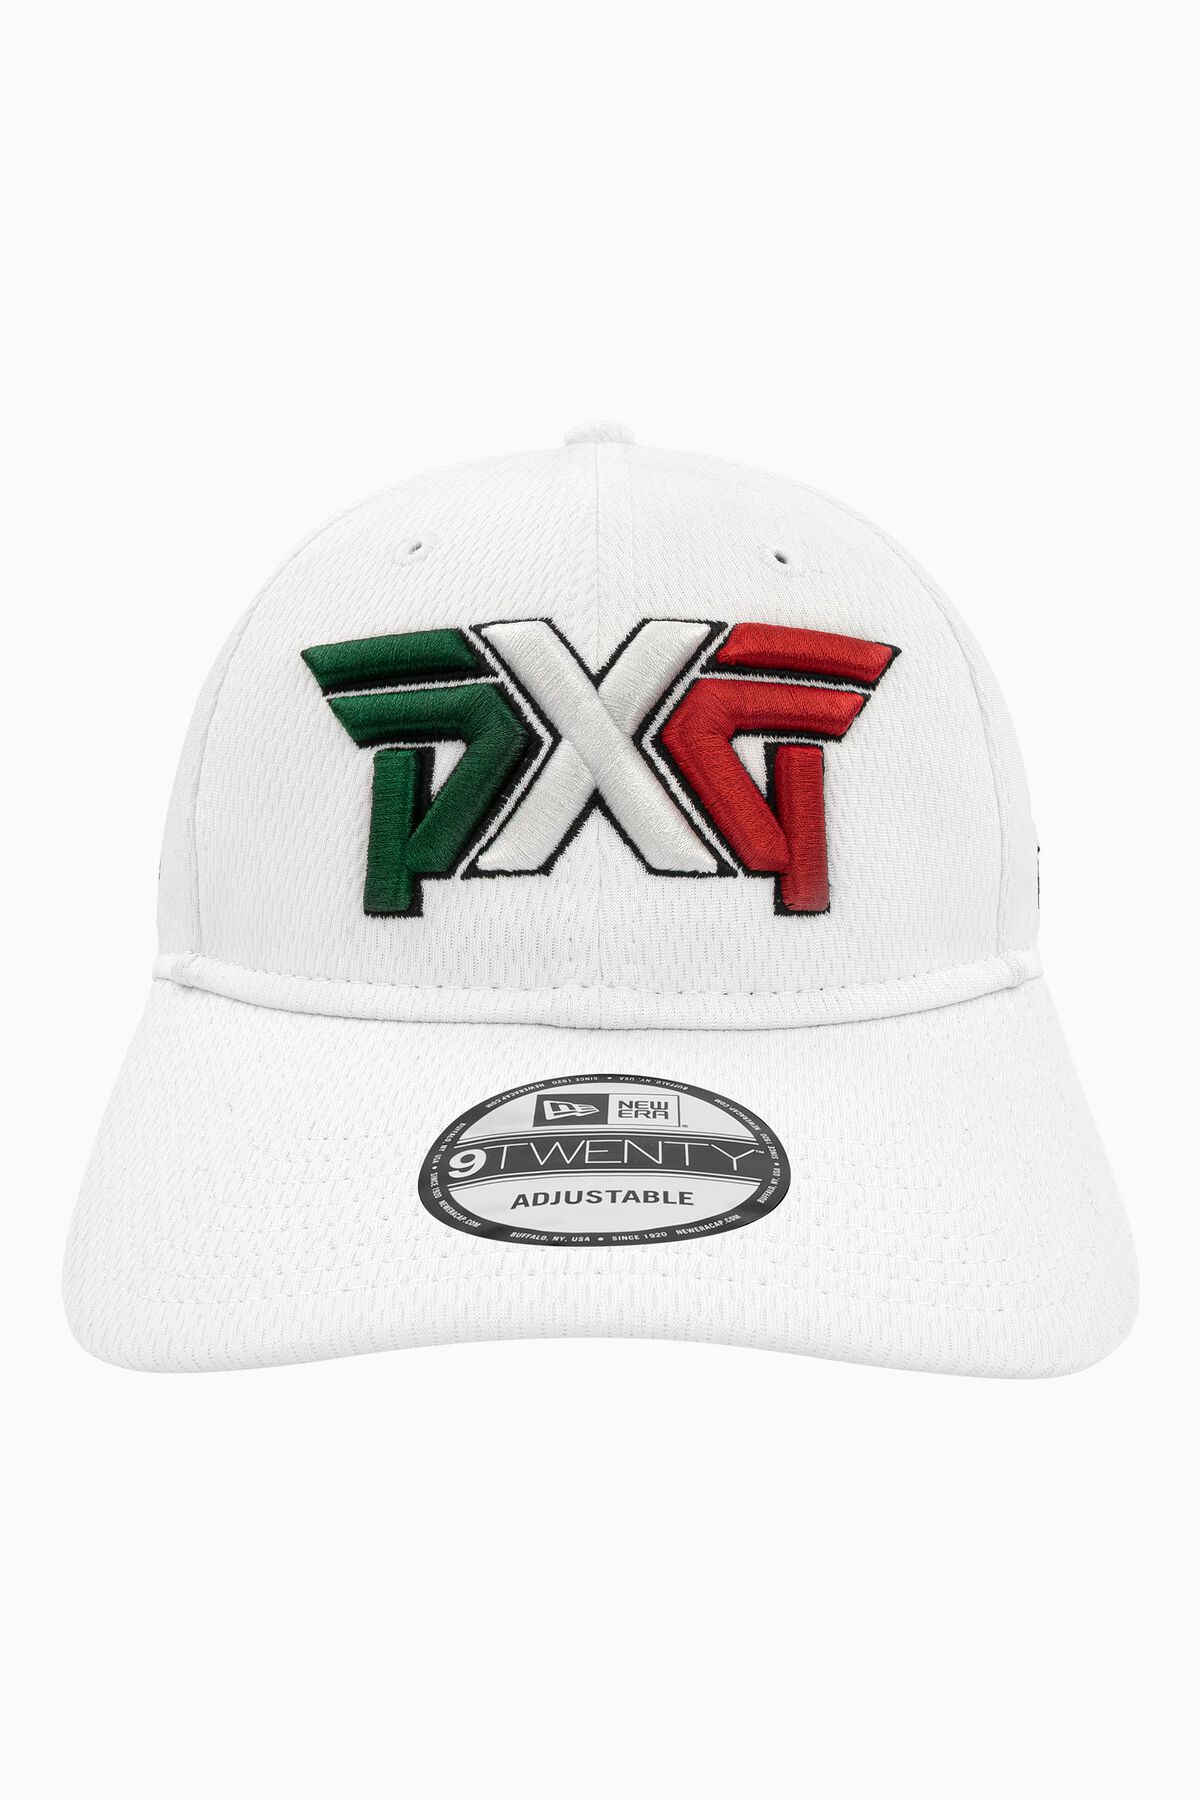 Mexico Flag 9TWENTY Adjustable Cap White